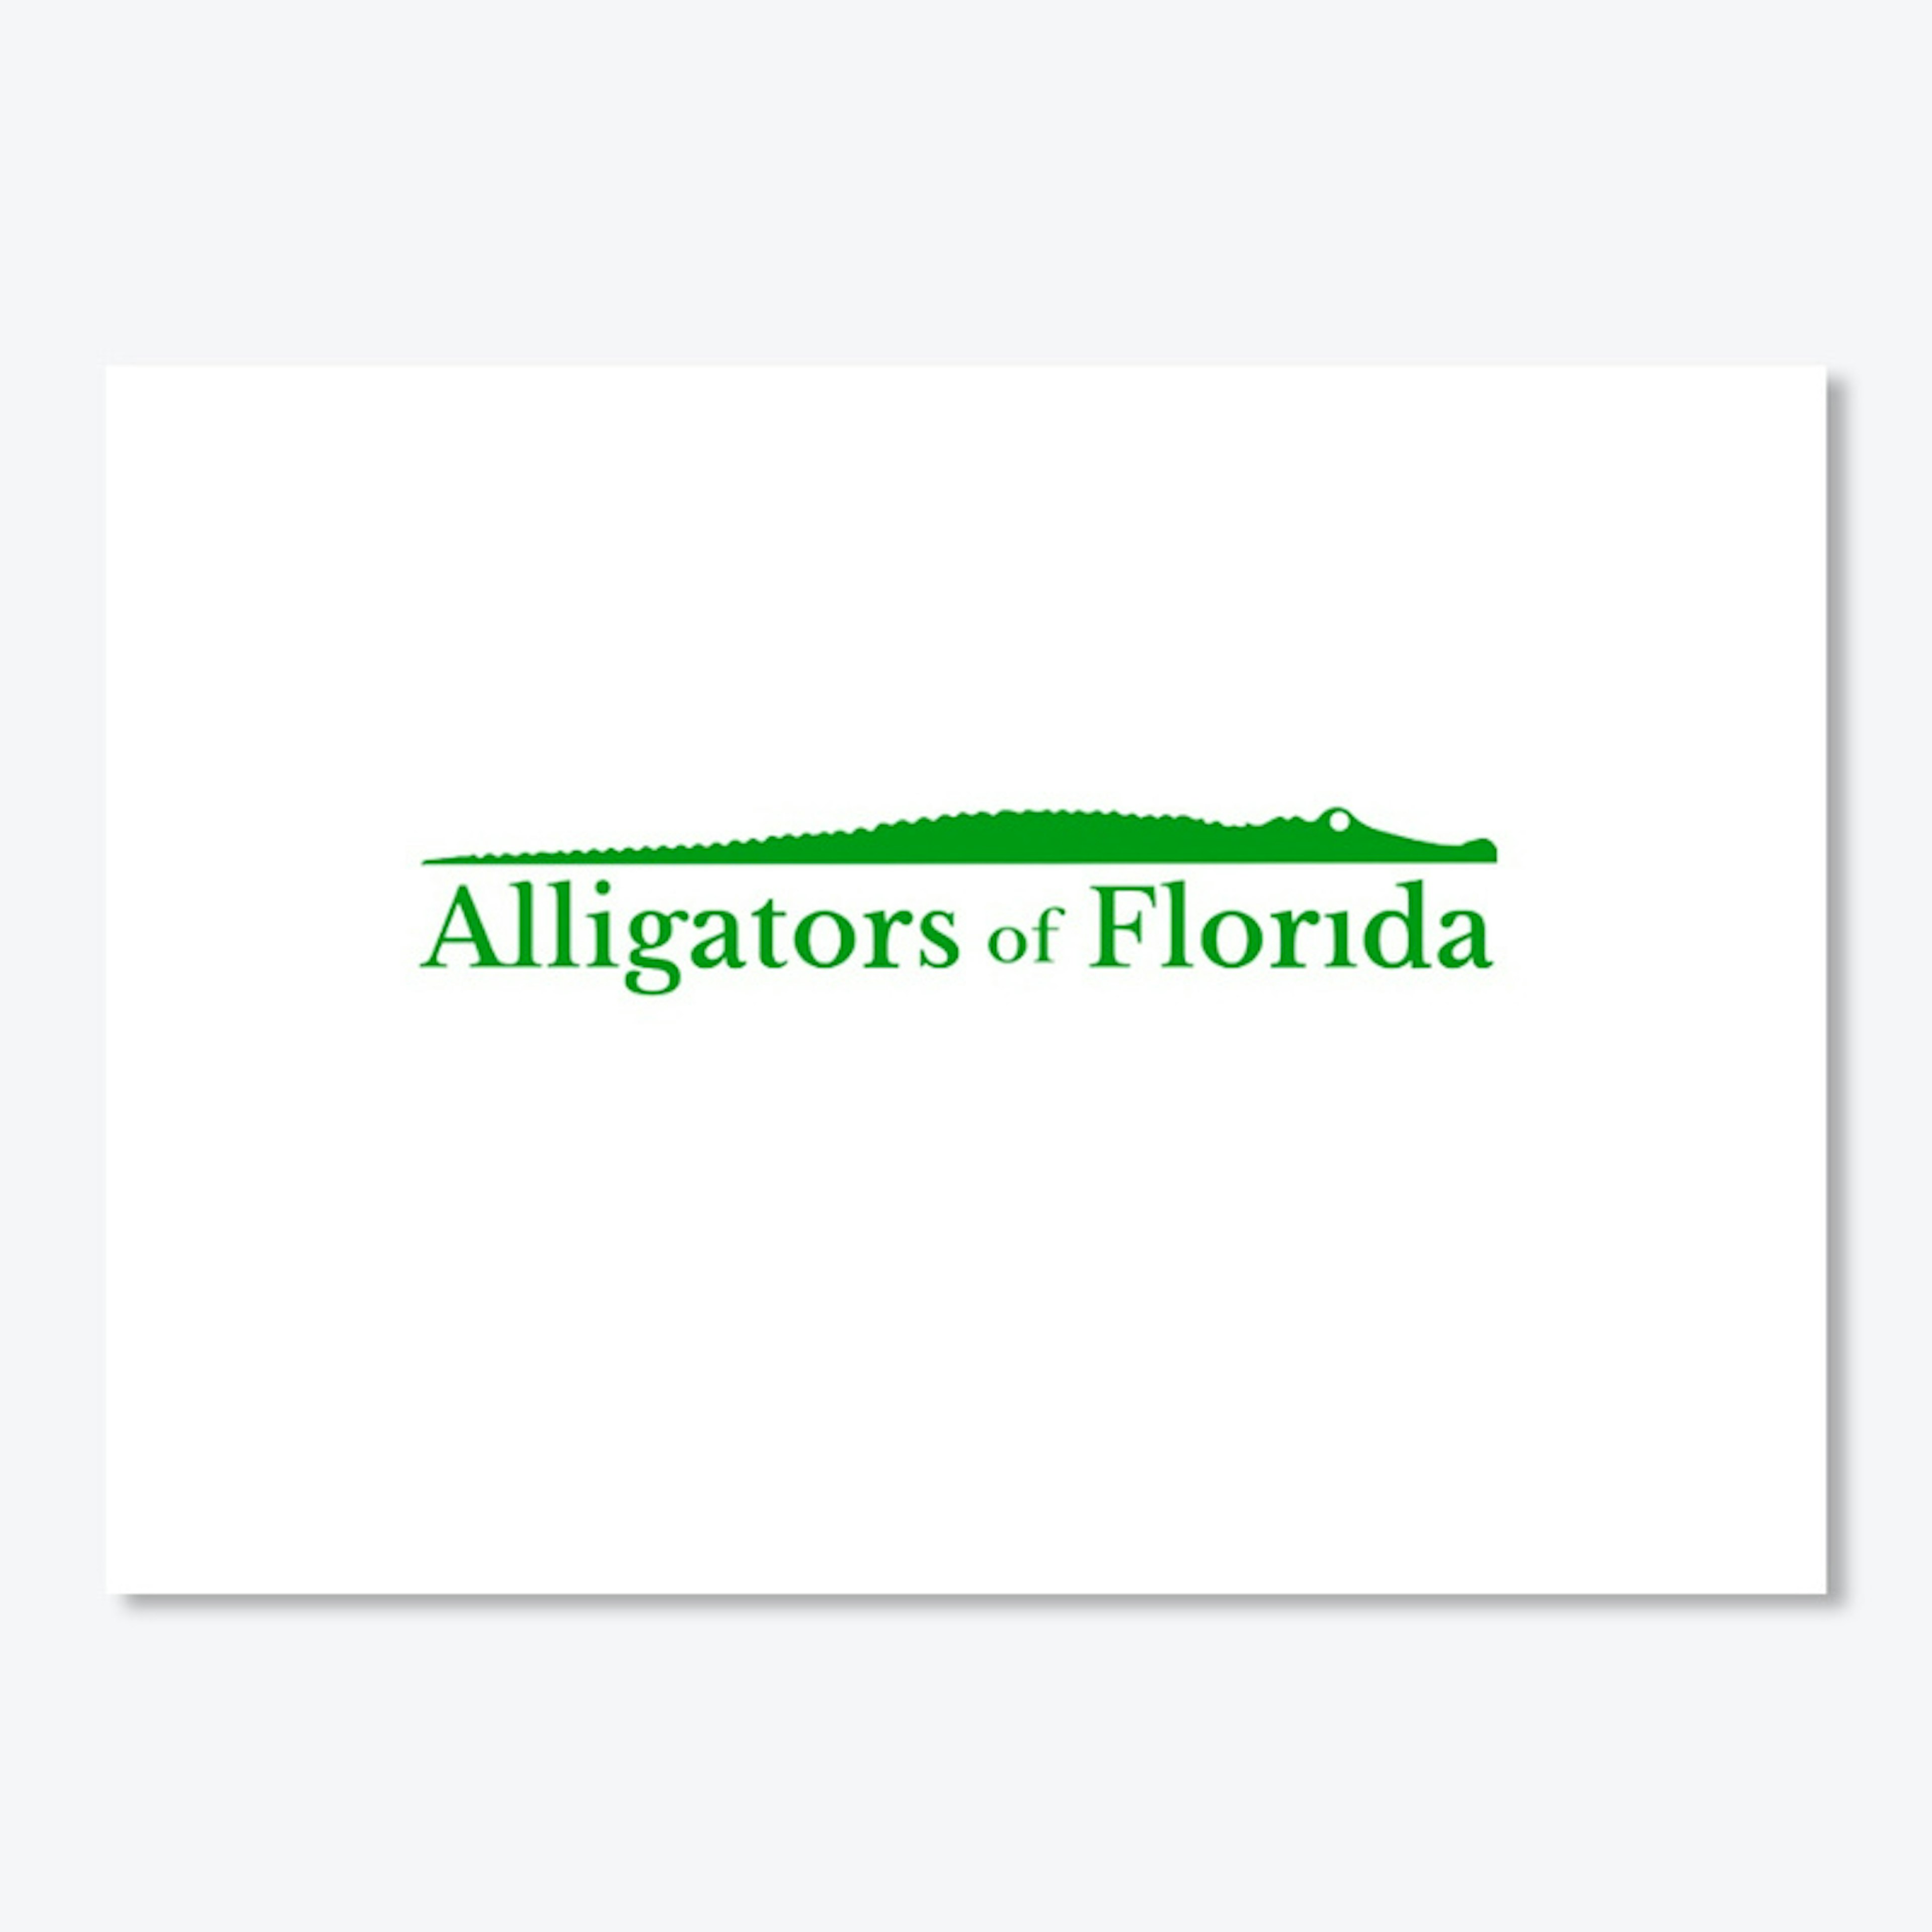 Alligators of Florida